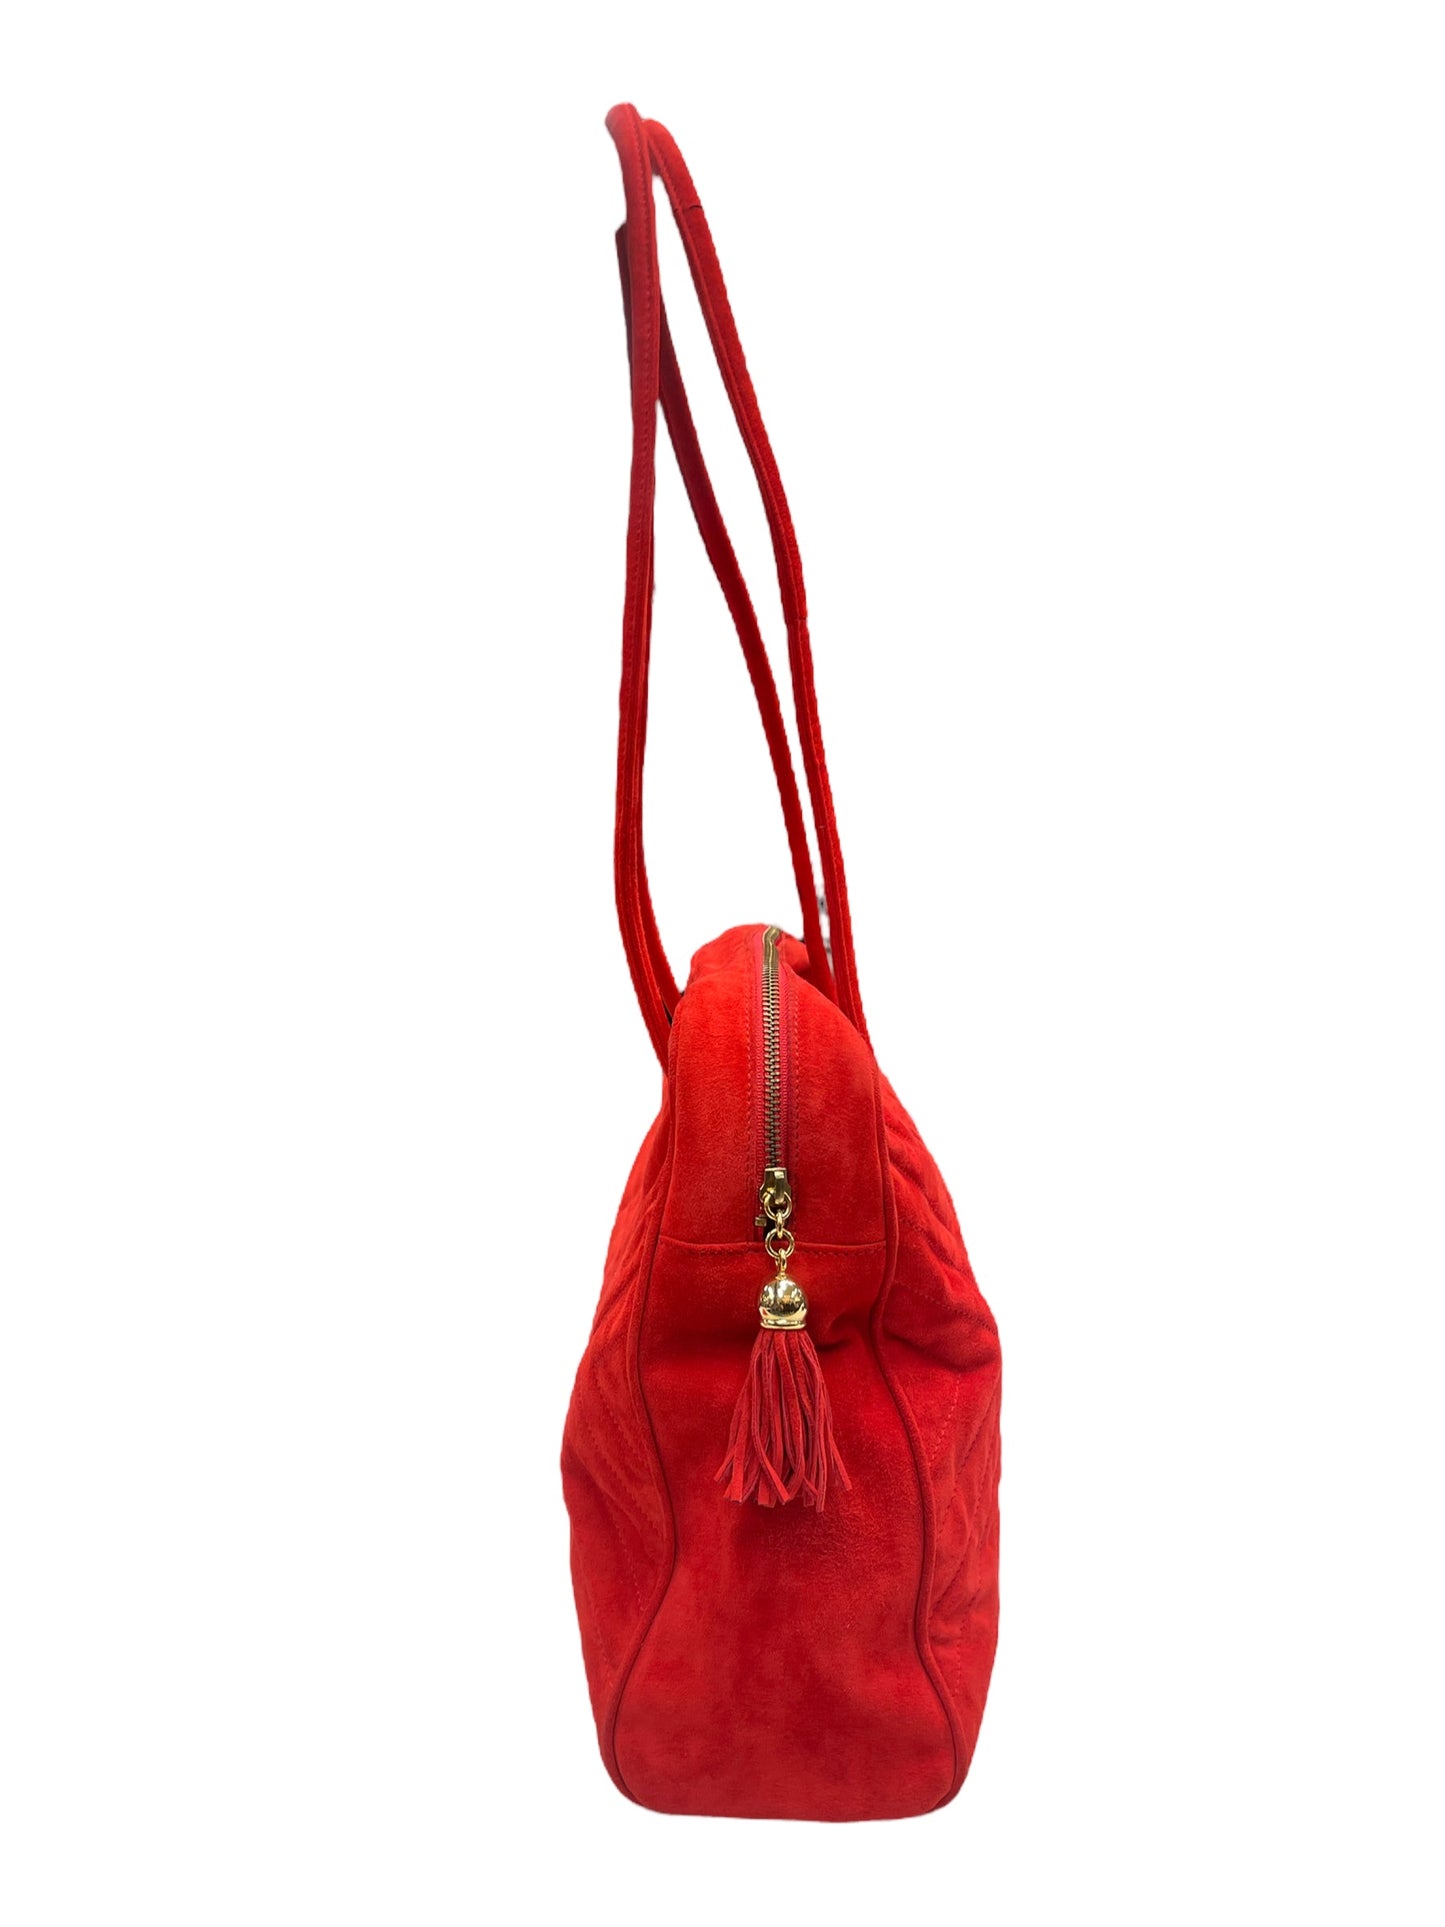 Handbag Designer By Escada  Size: Large